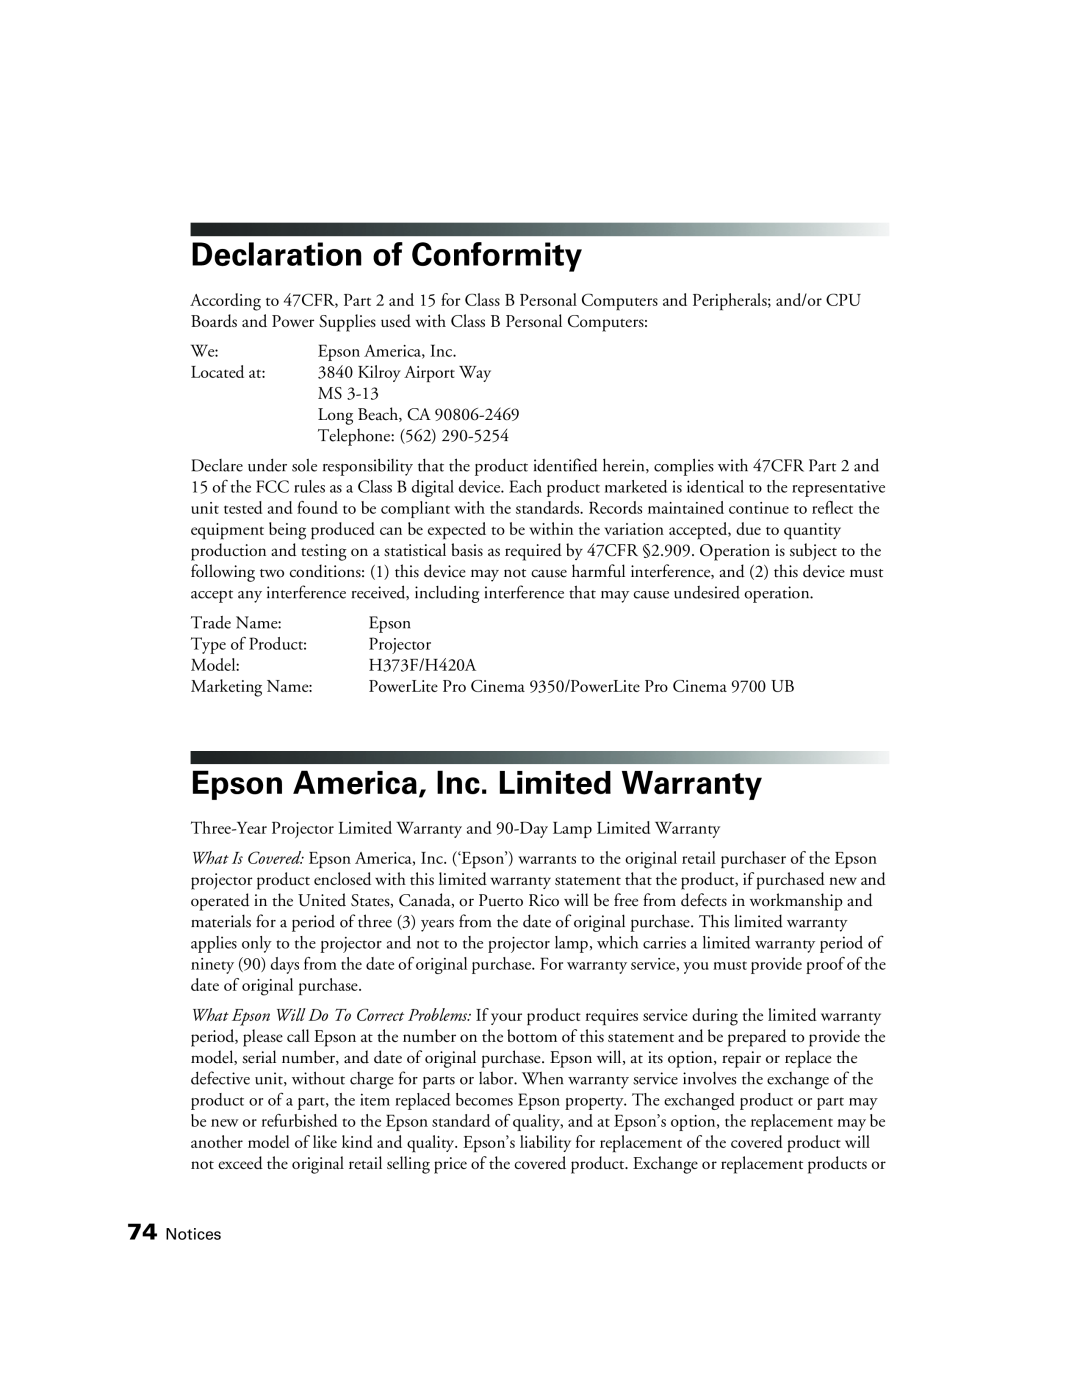 Epson 9350, 9700 manual Declaration of Conformity, Epson America, Inc. Limited Warranty 